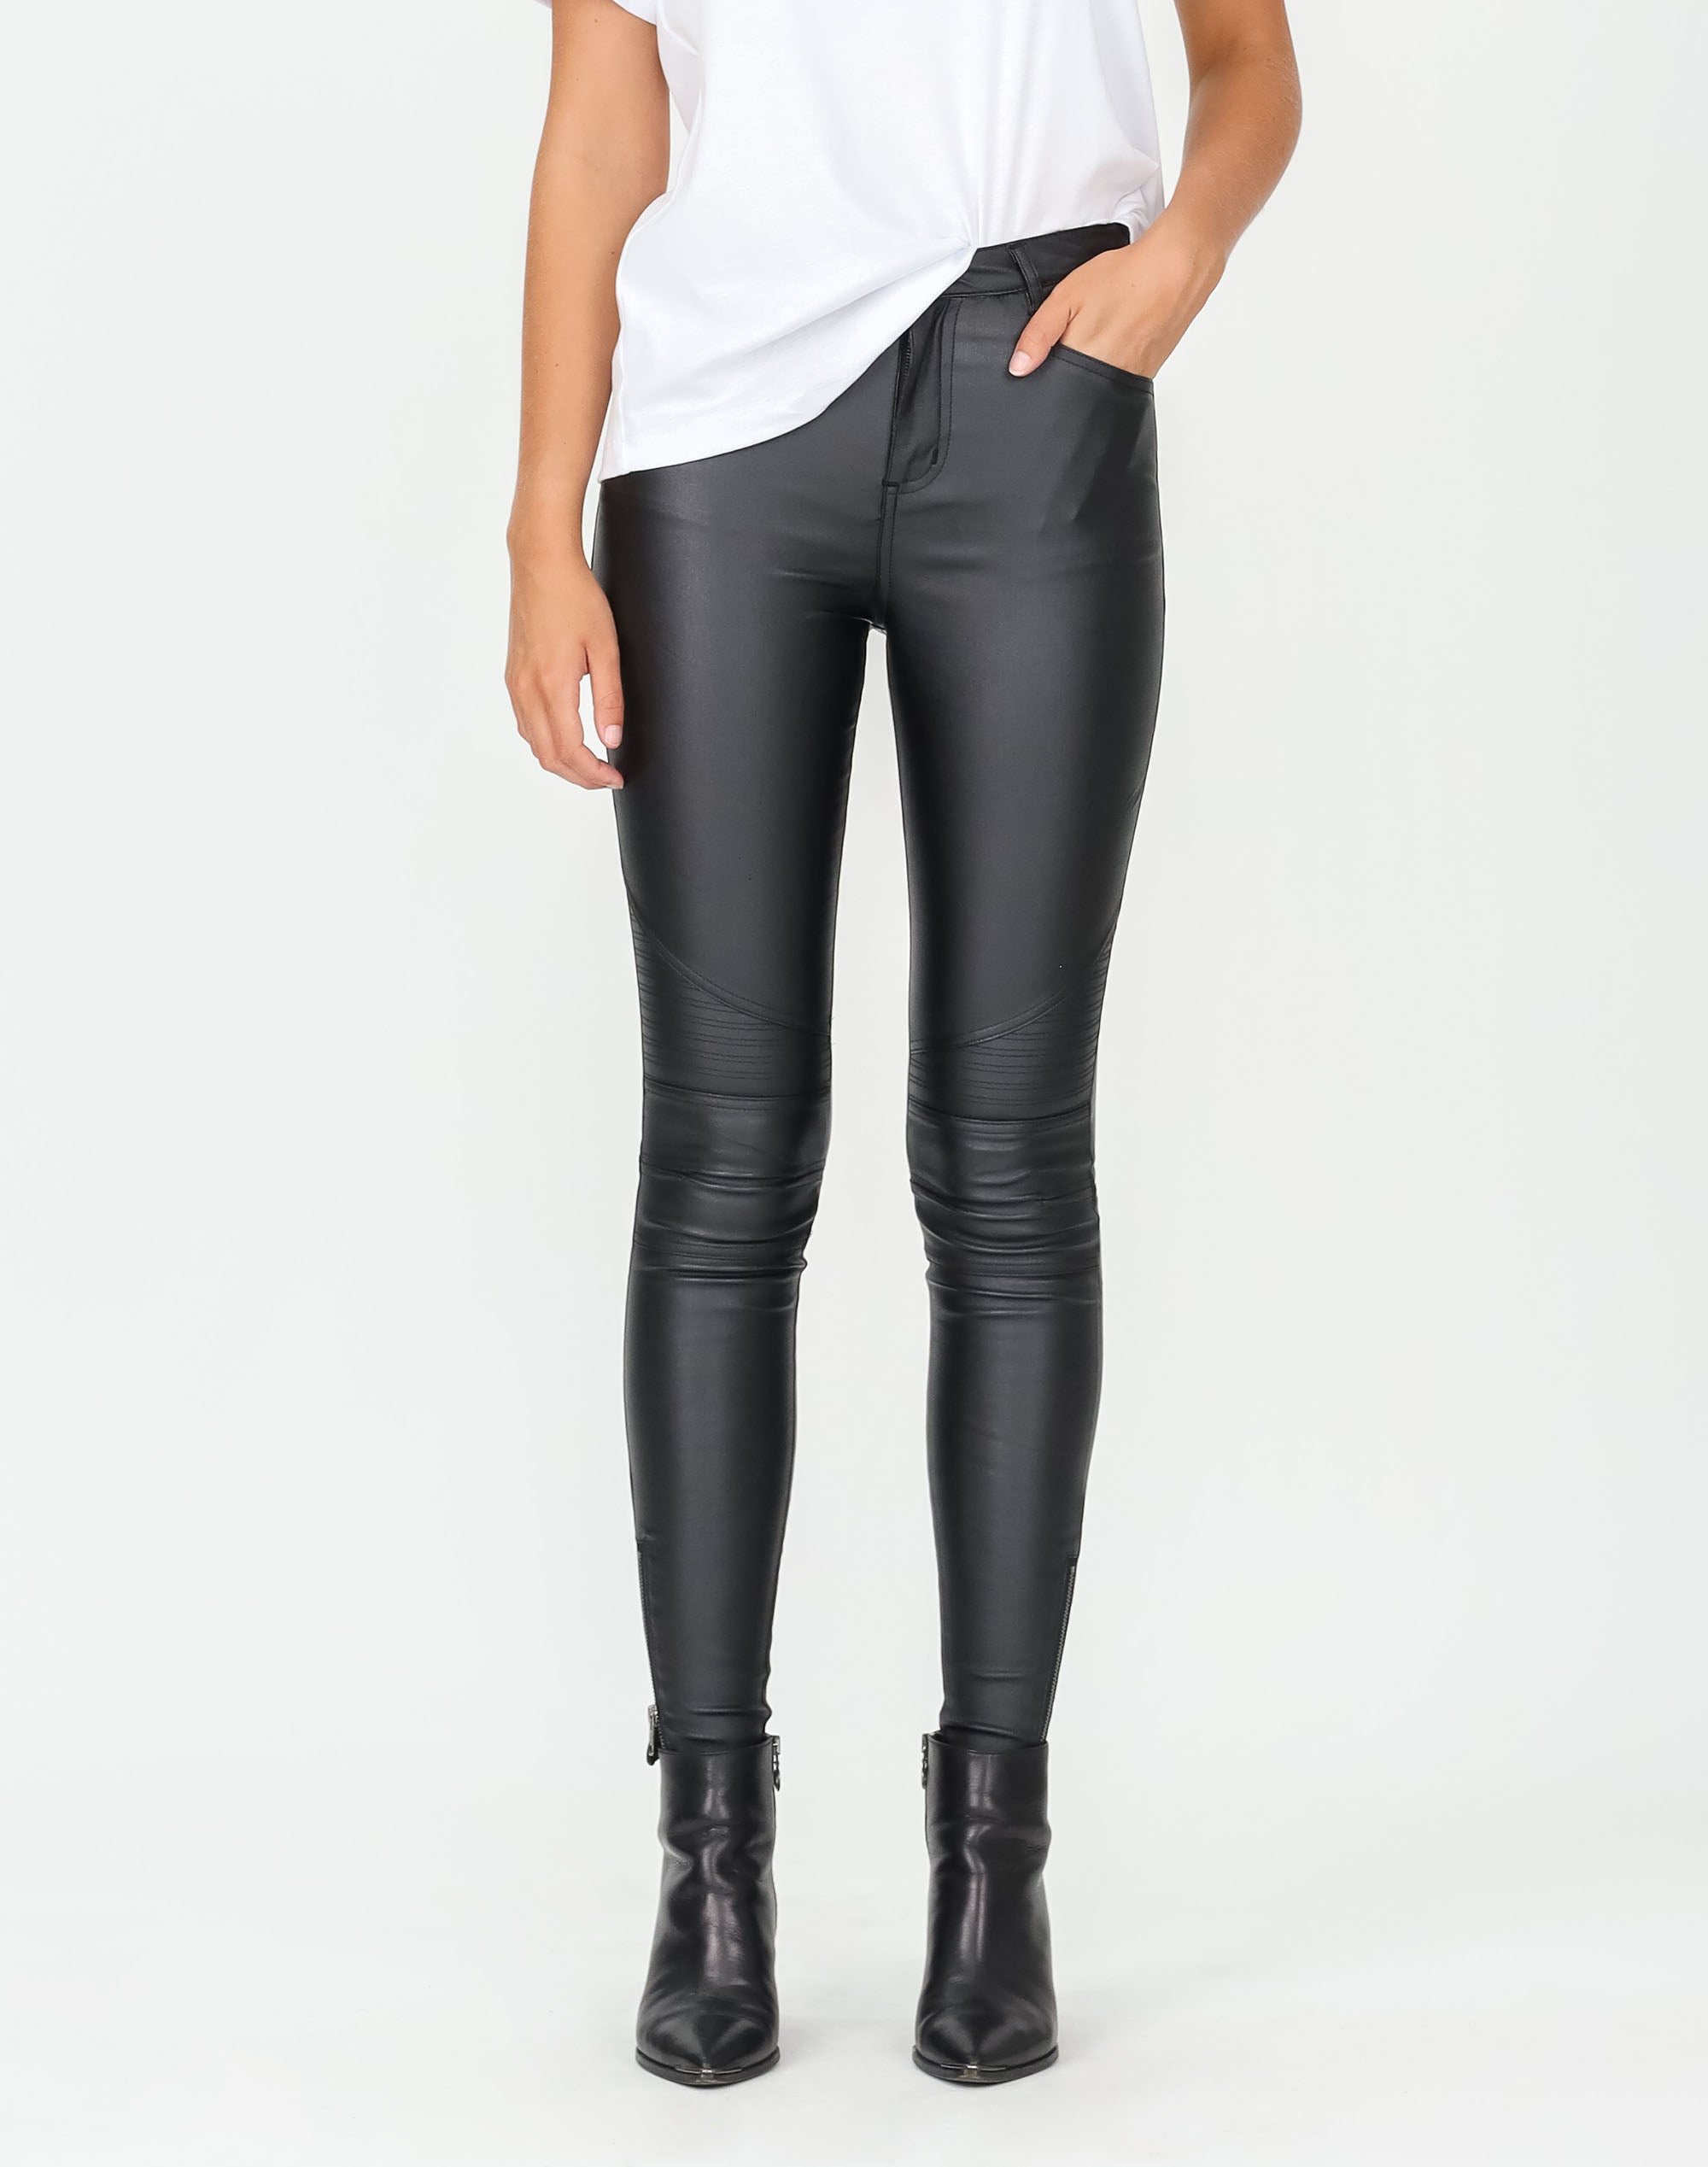 Hyfve Skinny Faux Leather Pant - Women's Pants in Black